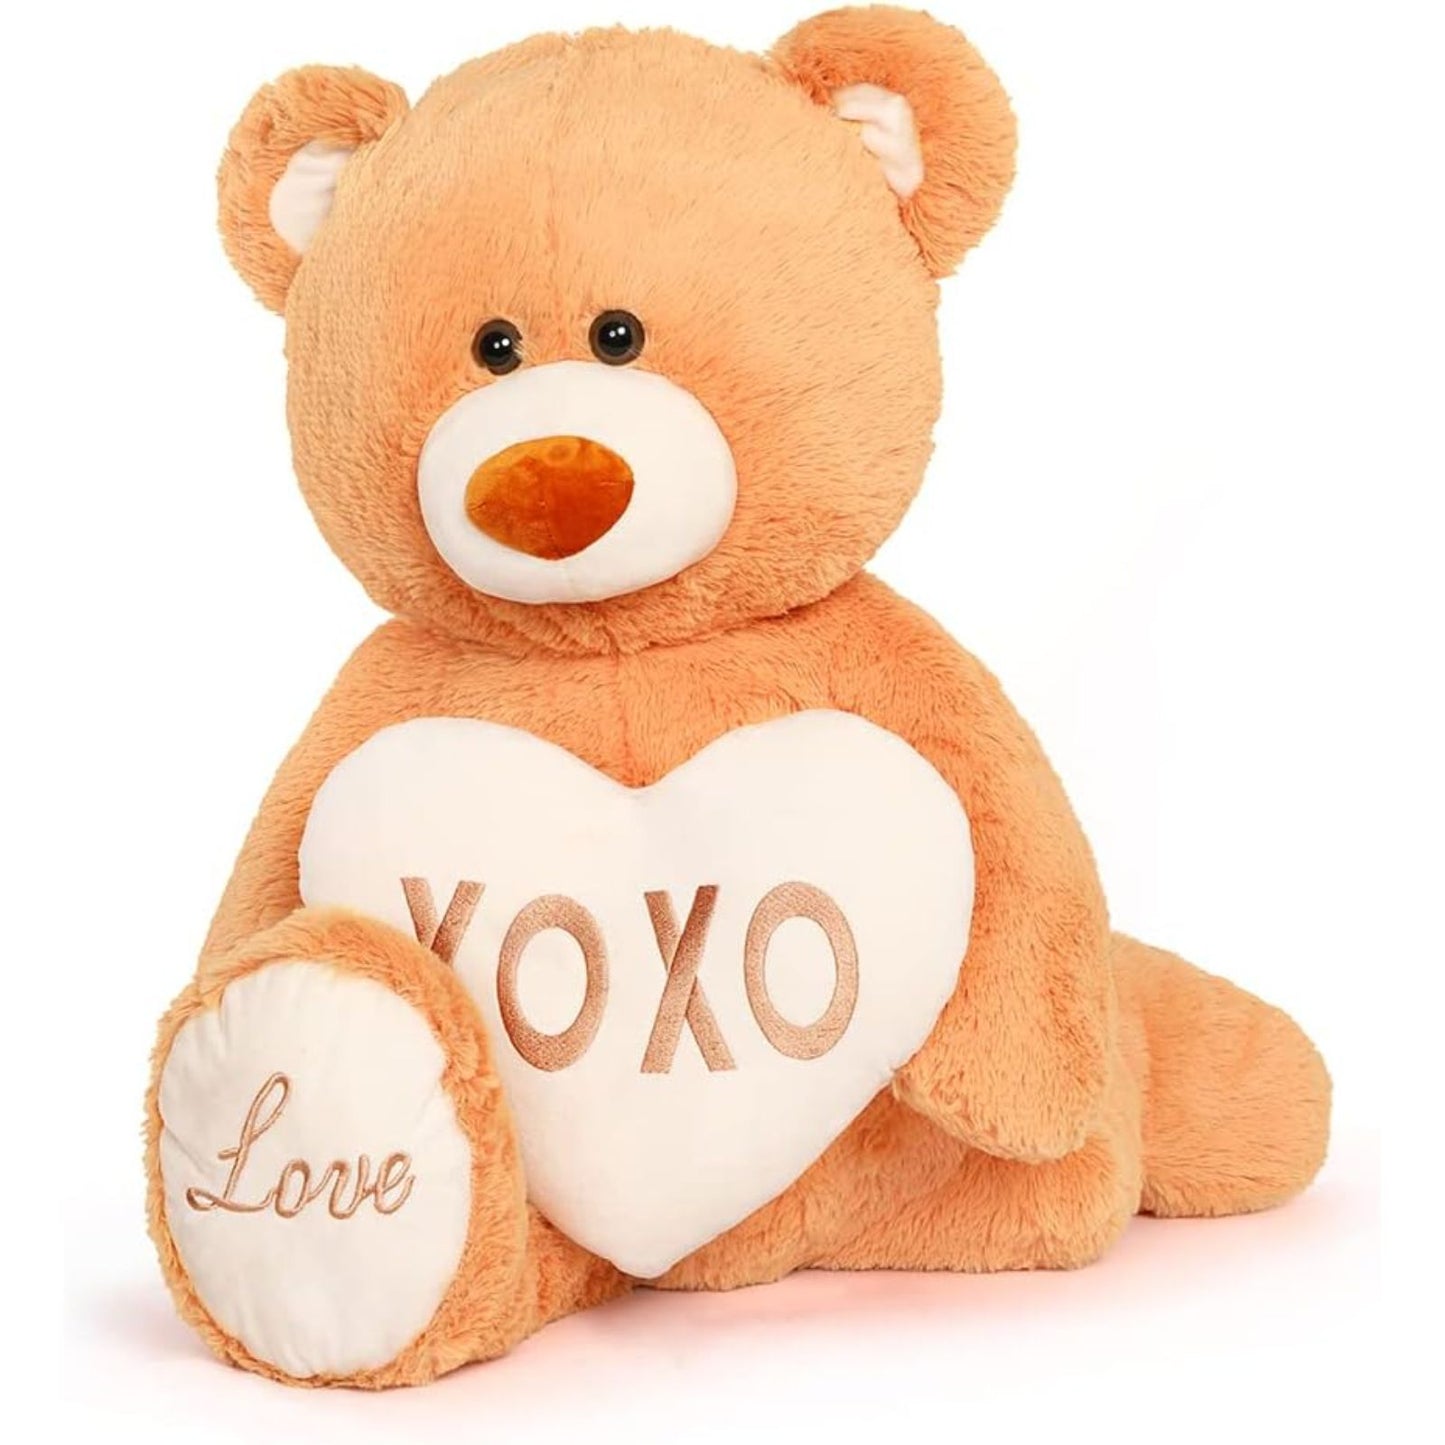 Big Teddy Bear with a Plush Heart, Orange/Lavender, 39 Inches